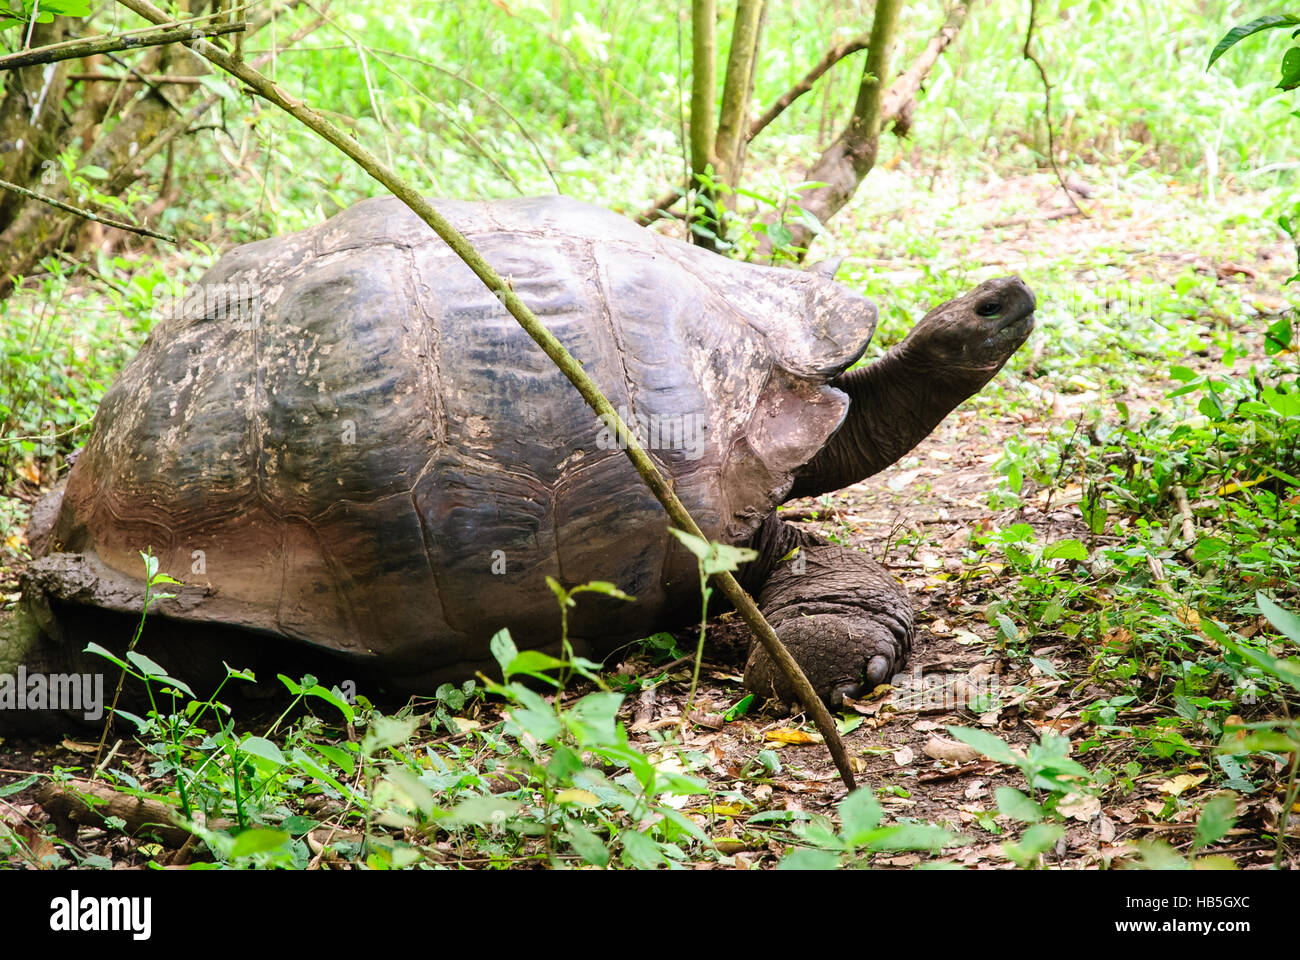 Giant tortoise on the move Stock Photo